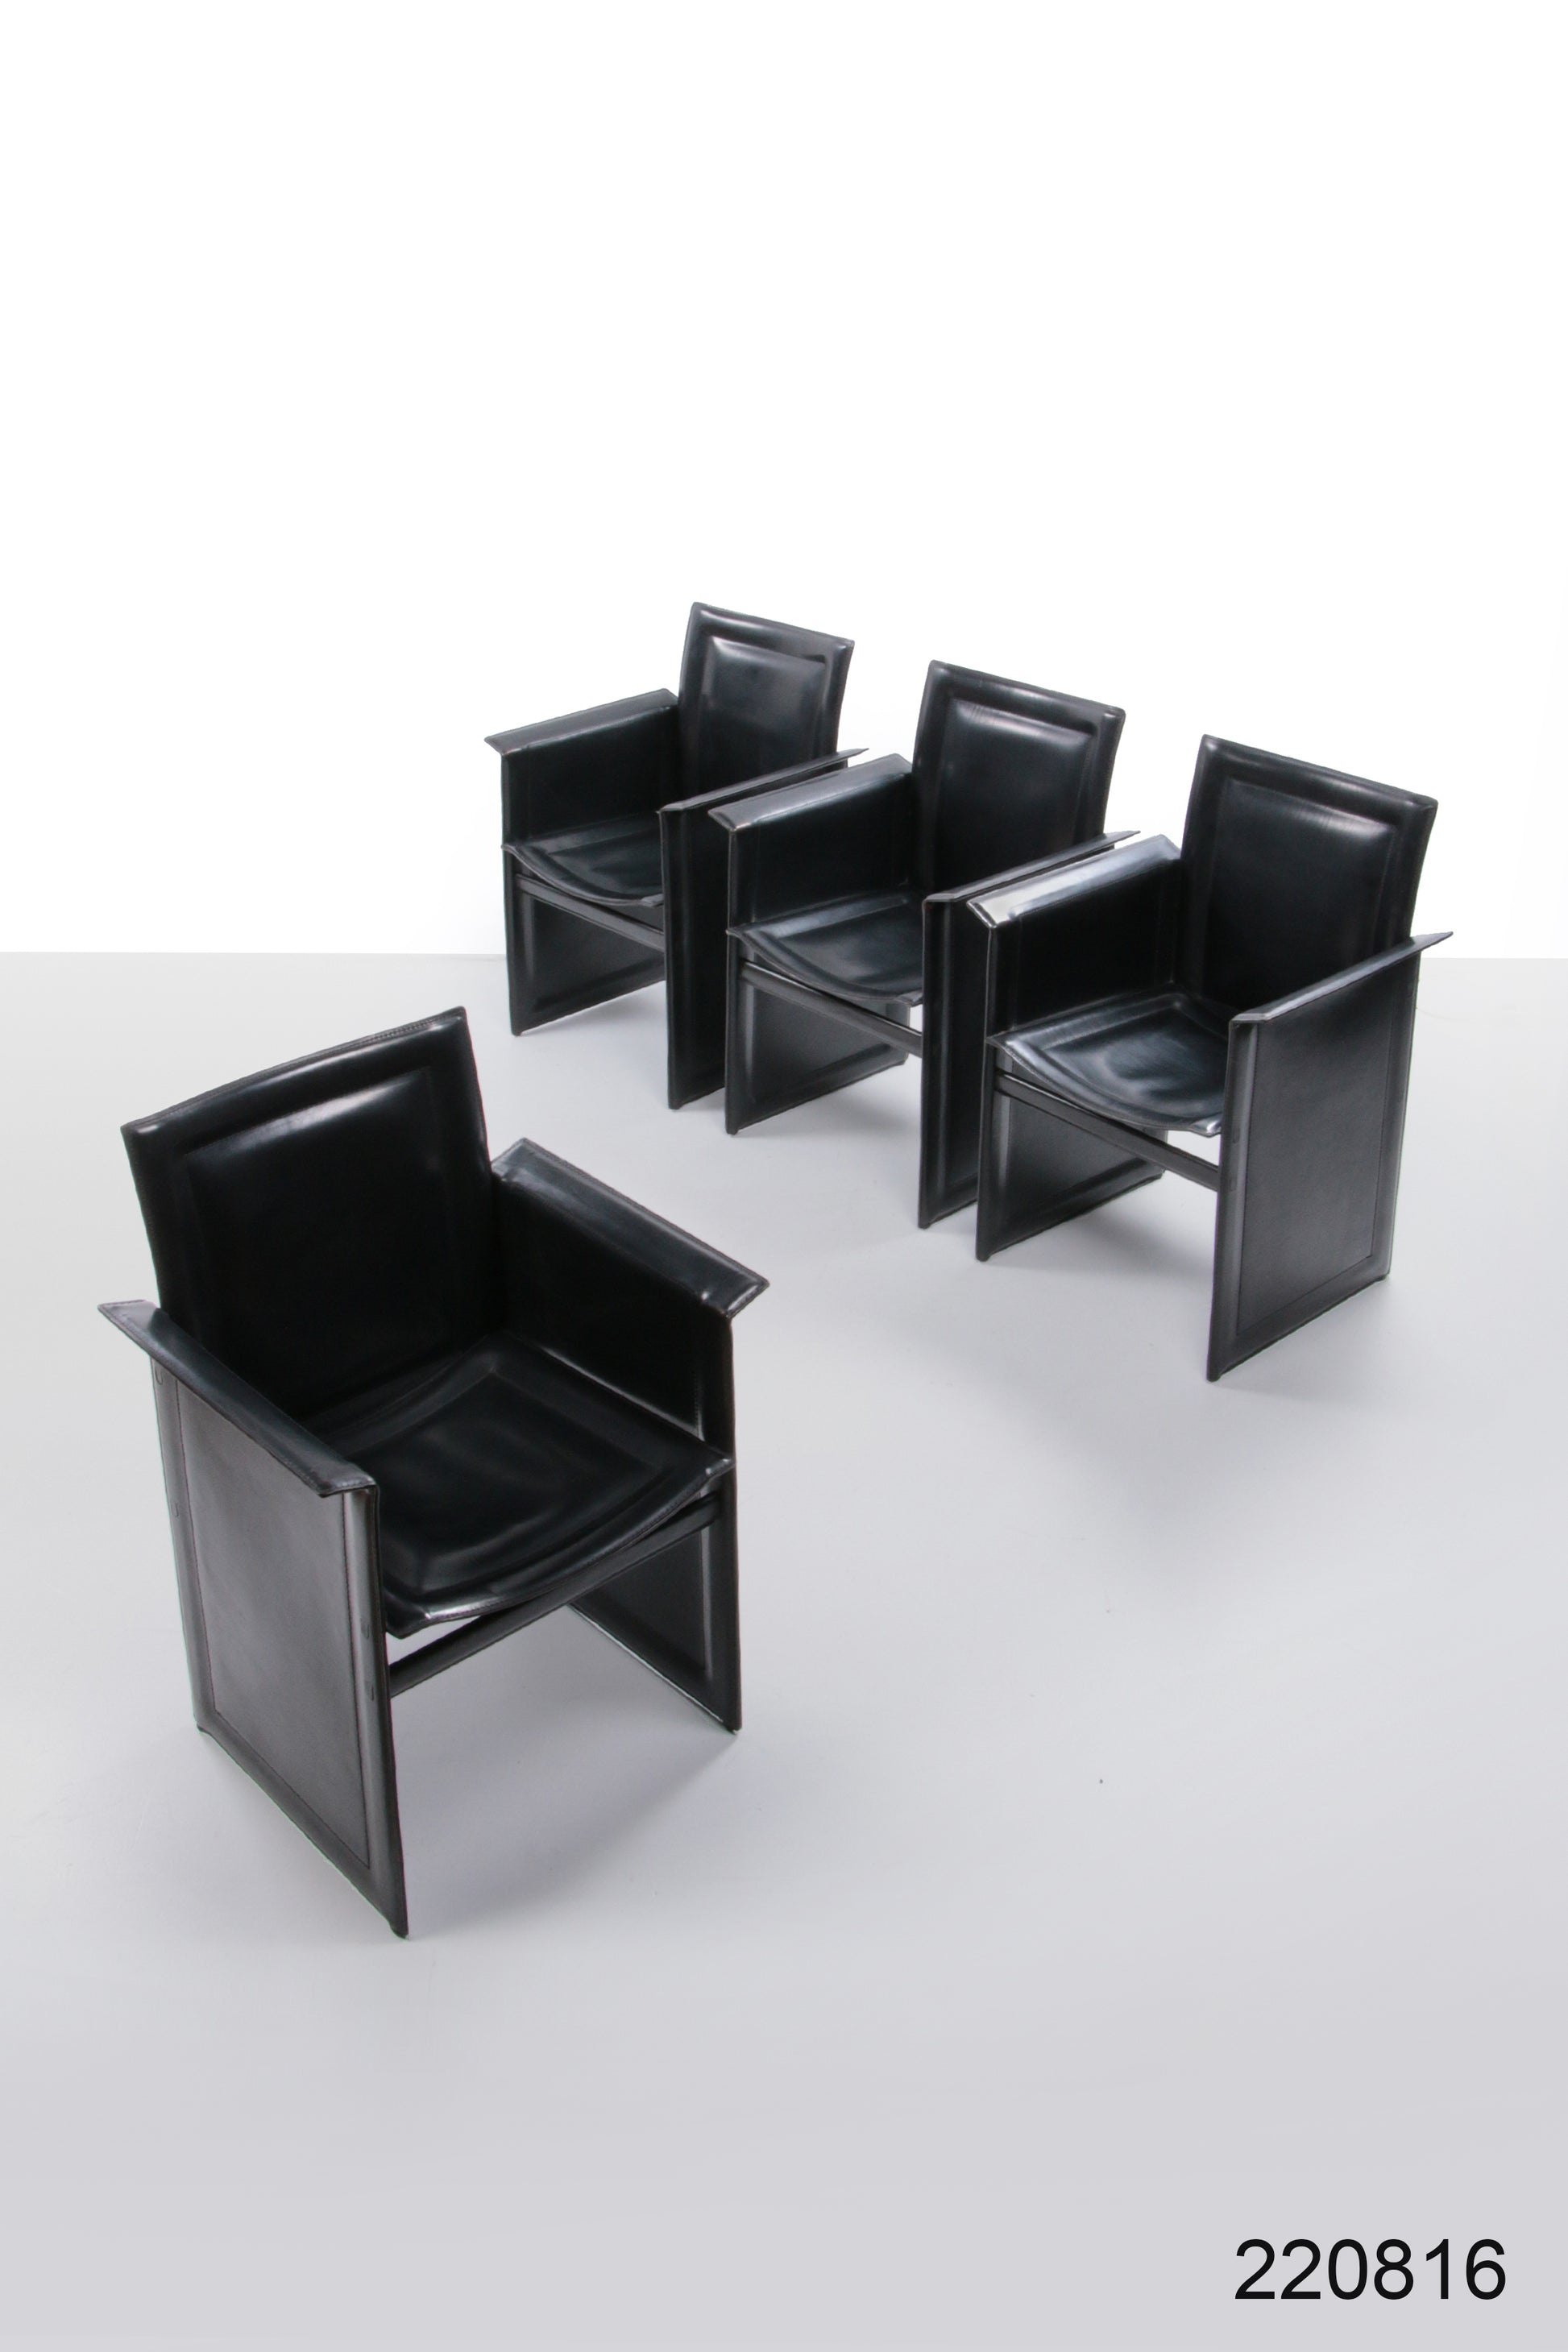 beschaving In werkelijkheid Theoretisch Solaria leather Set of 4 Dining Chairs made by Arrben,1970s Italy. –  Timeless-Art